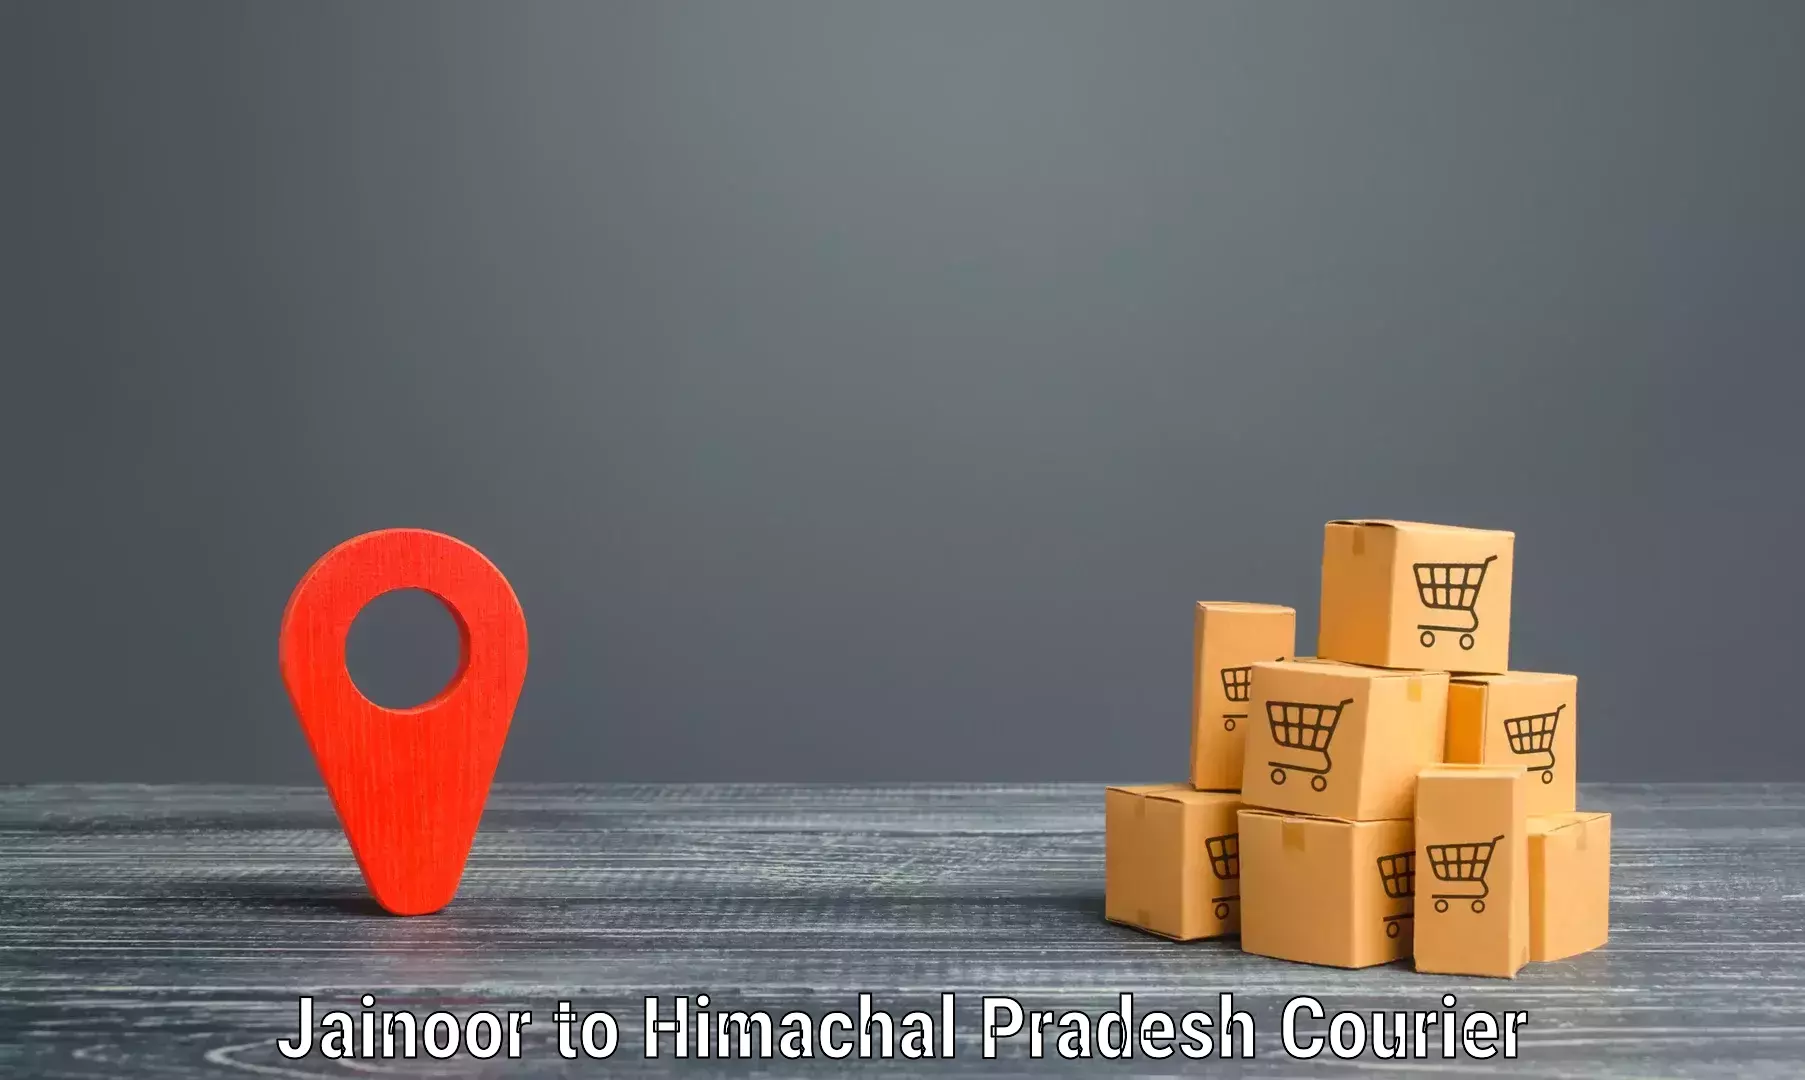 Reliable delivery network Jainoor to Darlaghat